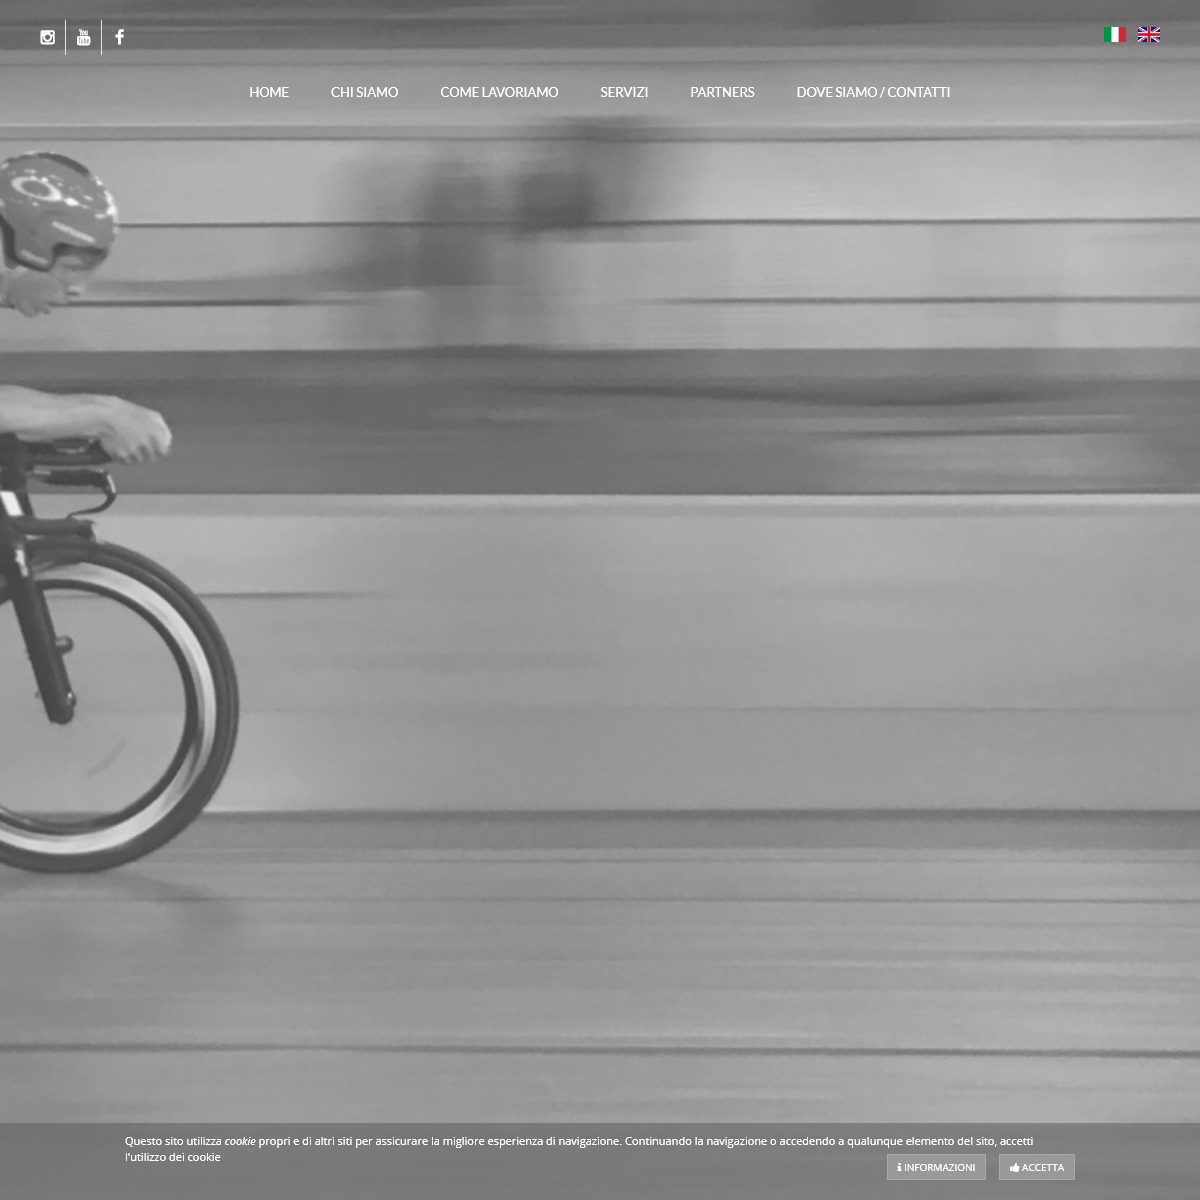 A complete backup of cyclingprojectitalia.com